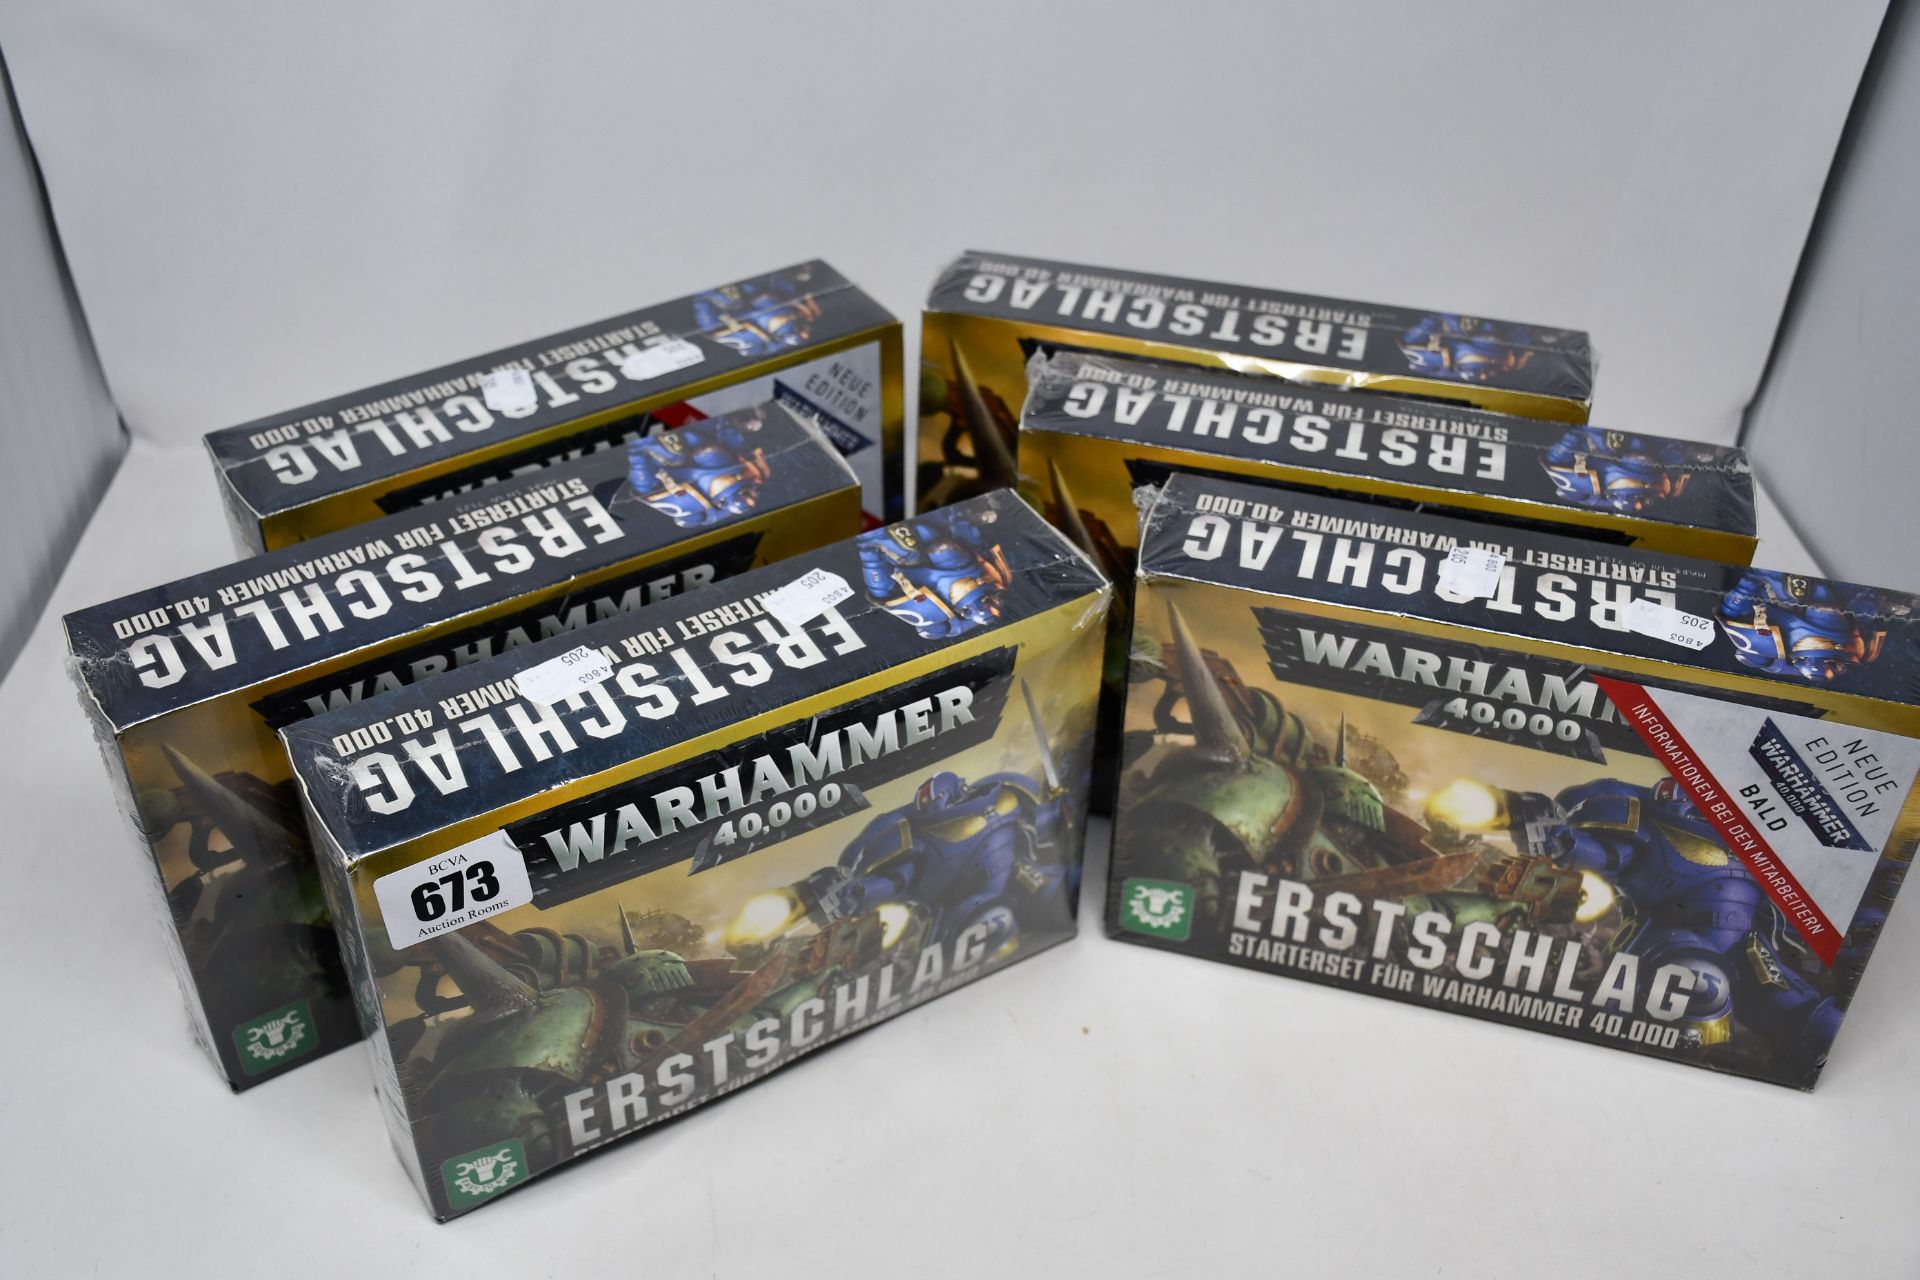 Six boxed as new Warhammer 40.000: Erstschlag (First strike, German version).